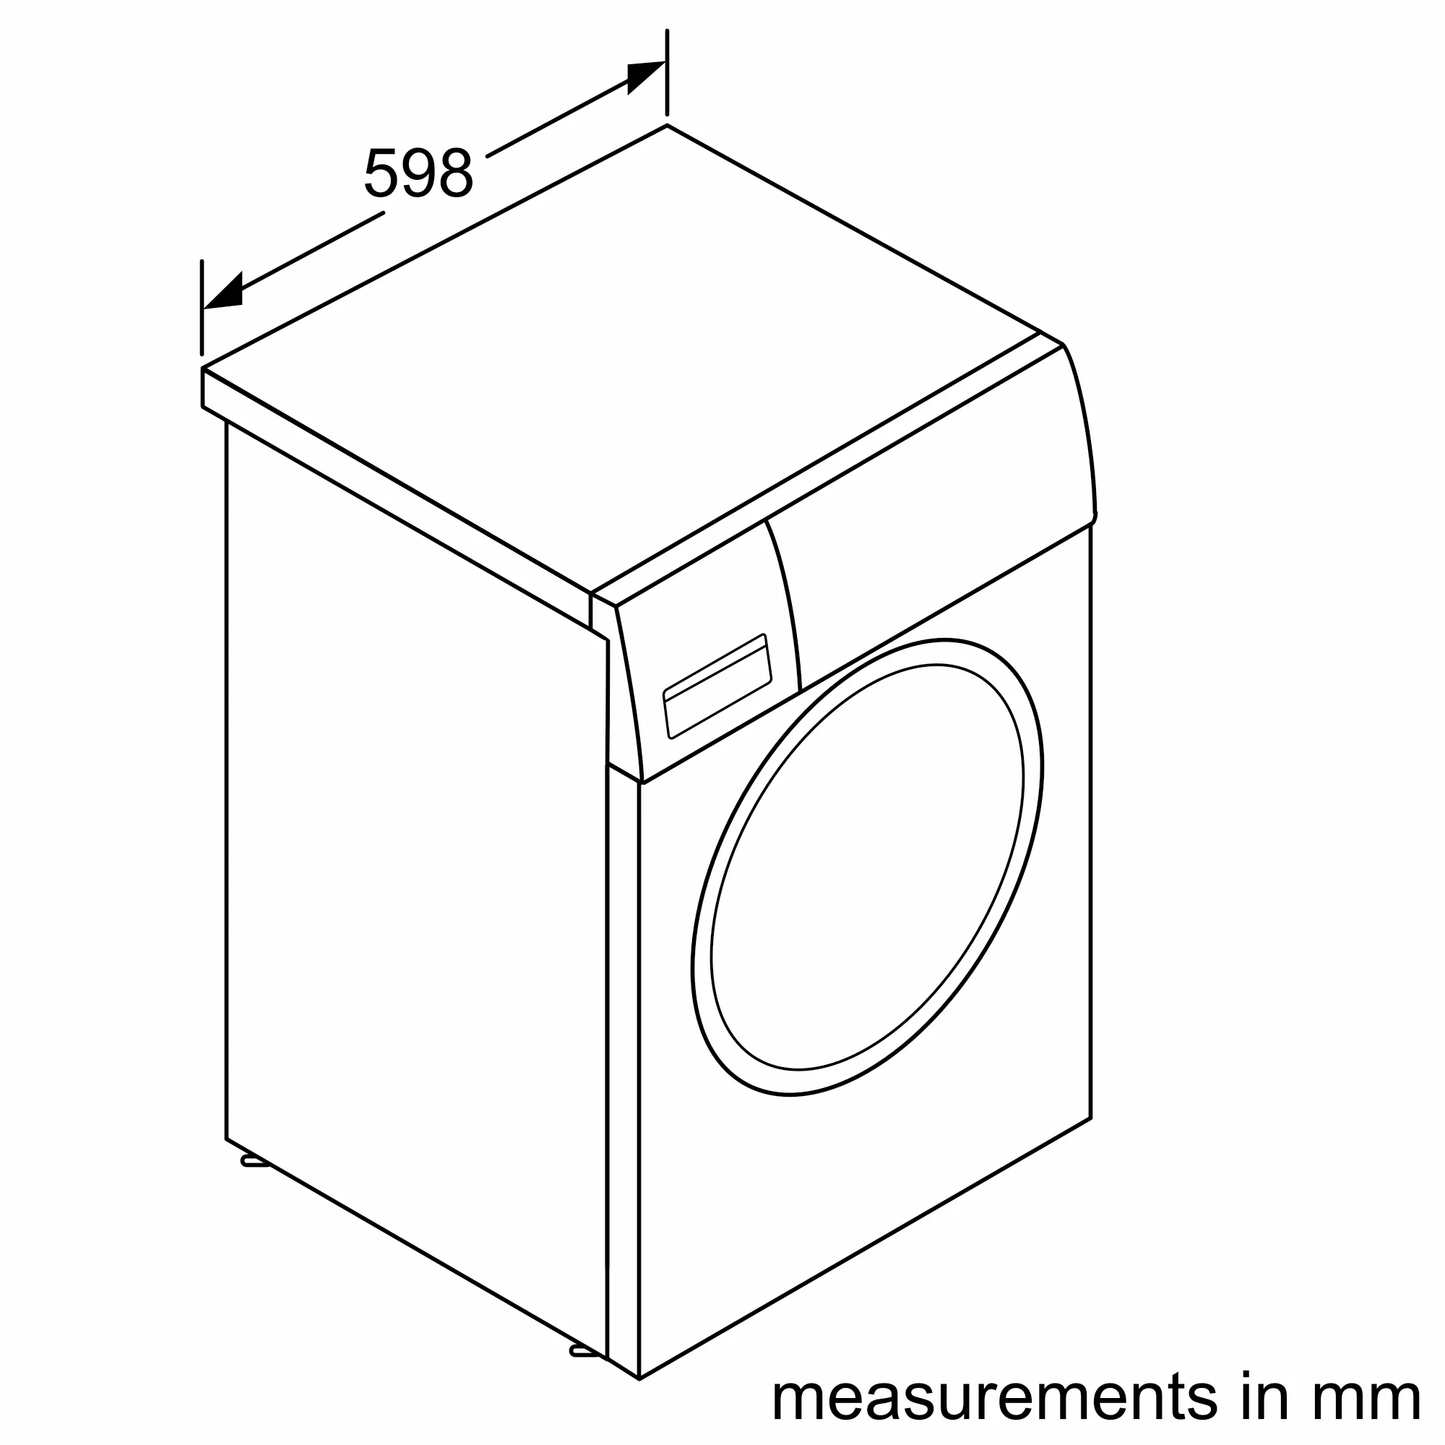 BOSCH WGA246UGHK Front Loading Washing Machine - Series 8 博西 獨立式洗衣機 | 廚房電器 | 家電 |